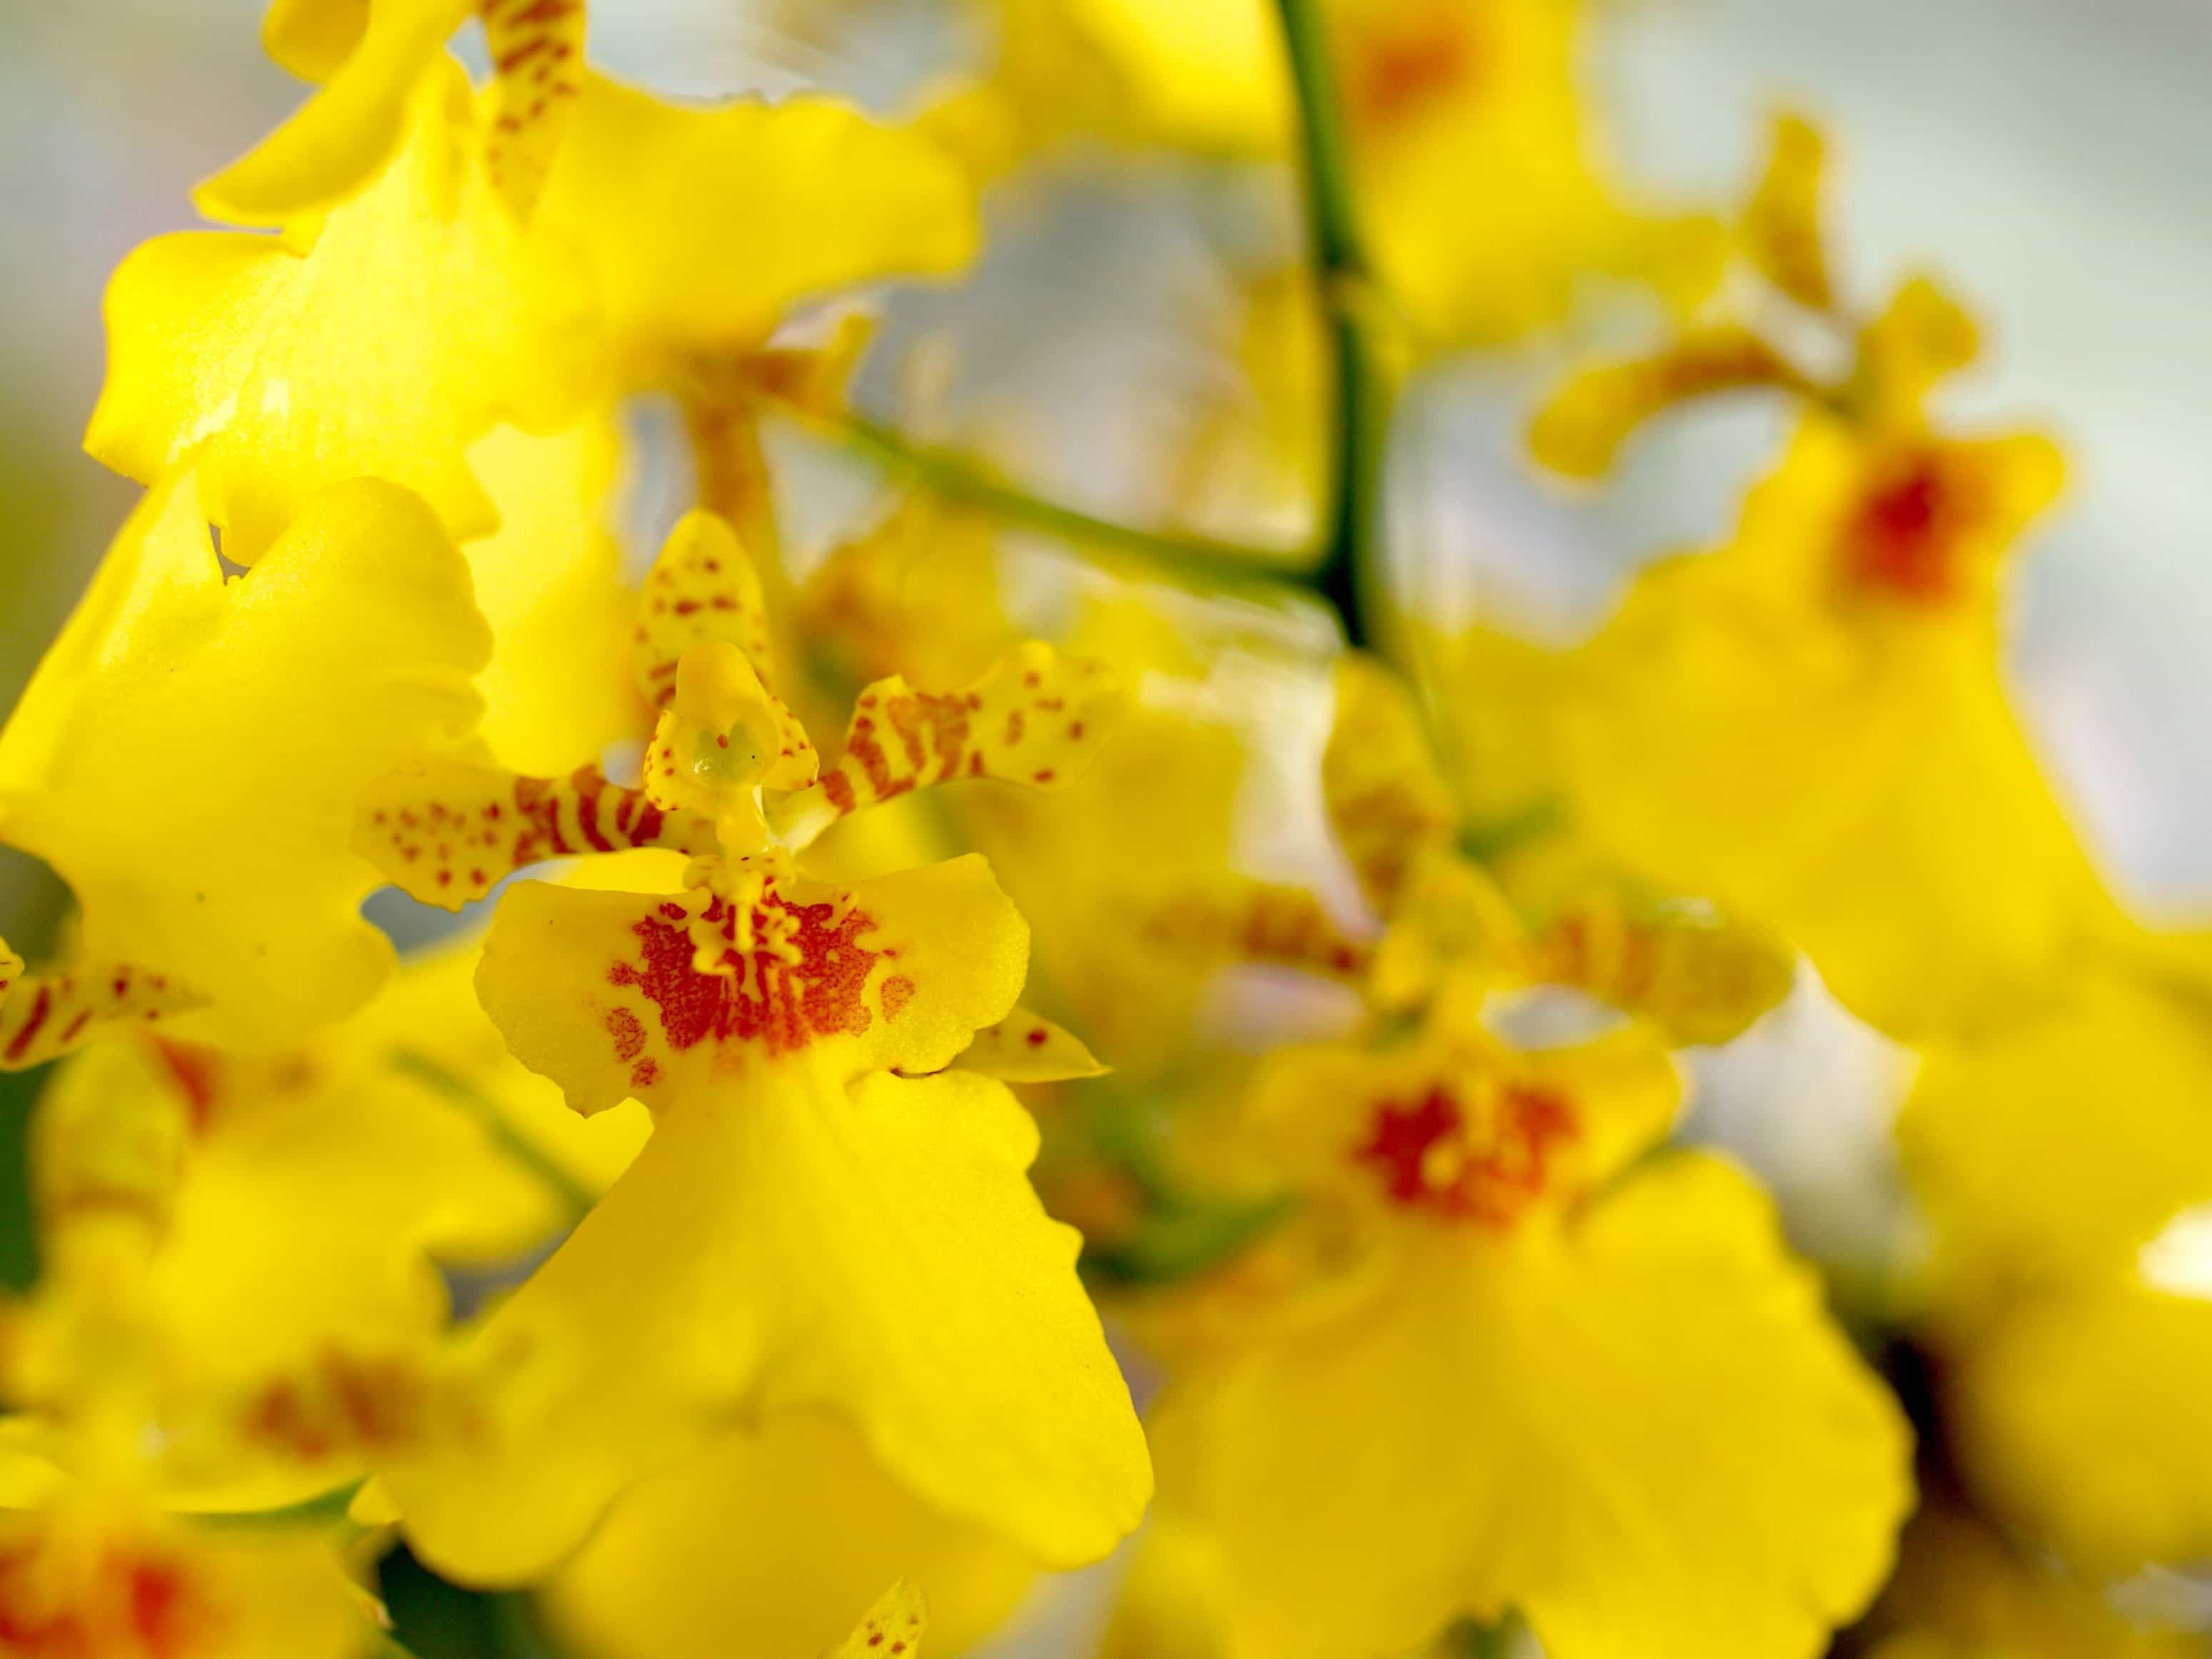 Imagem gratuita: natureza, néctar, flores, flora, folha, orquídea amarela,  detalhe, planta, erva